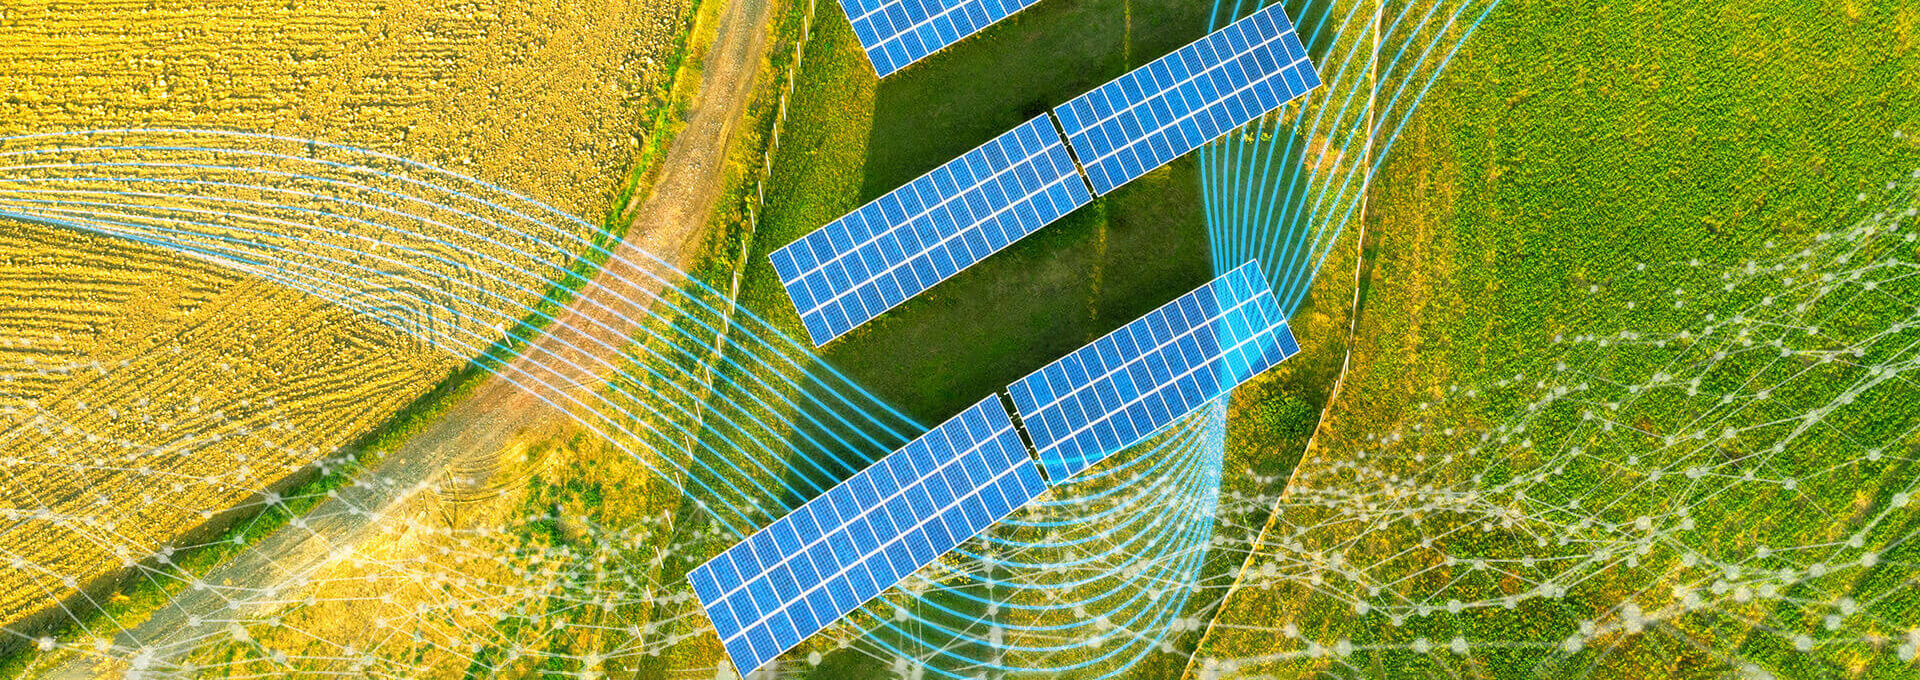 Solarenergie - Photovoltaik